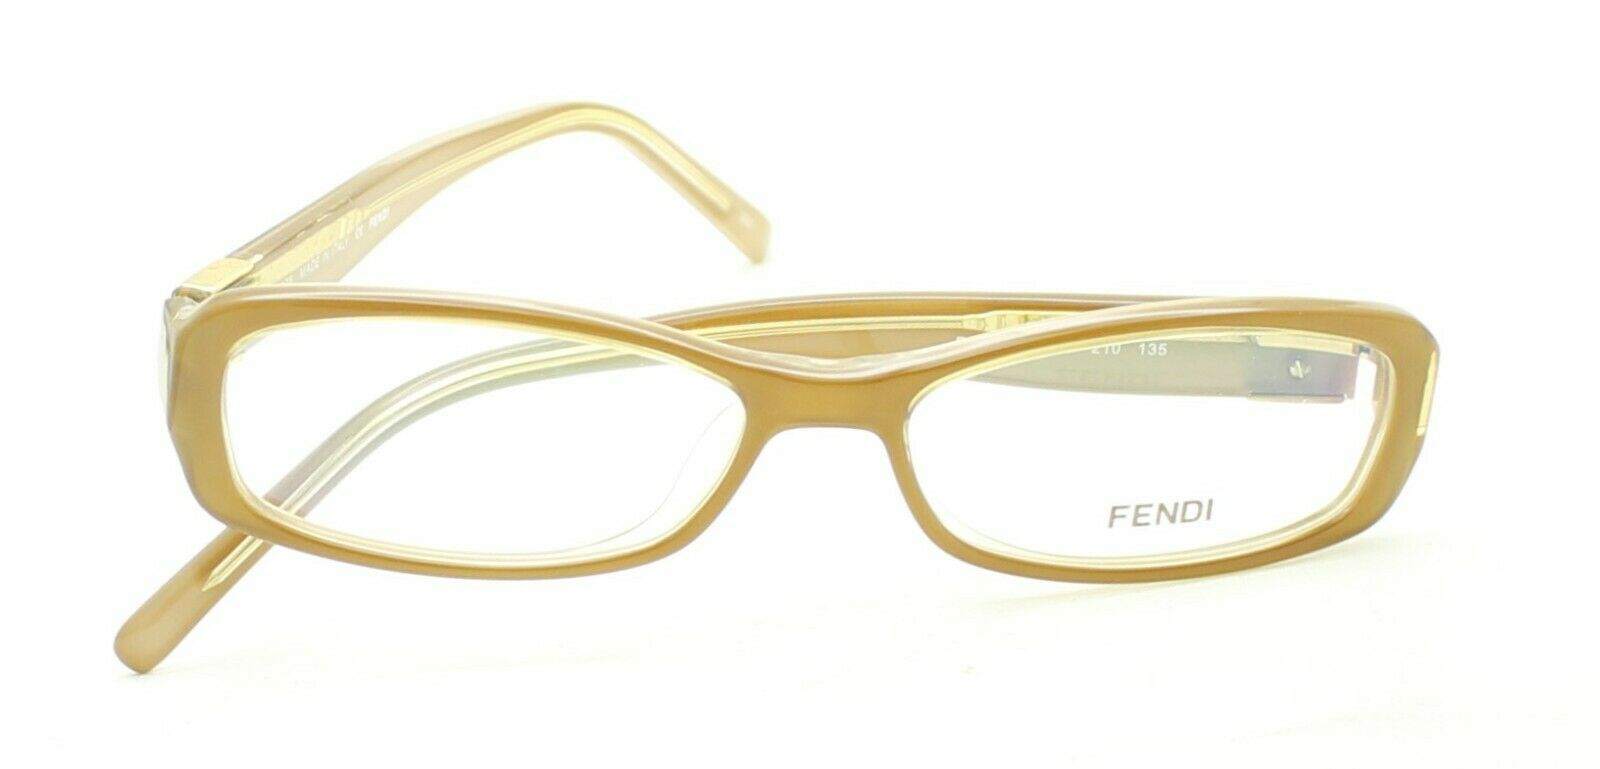 FENDI F996 210 51mm Eyewear RX Optical FRAMES Glasses Eyeglasses New - Italy